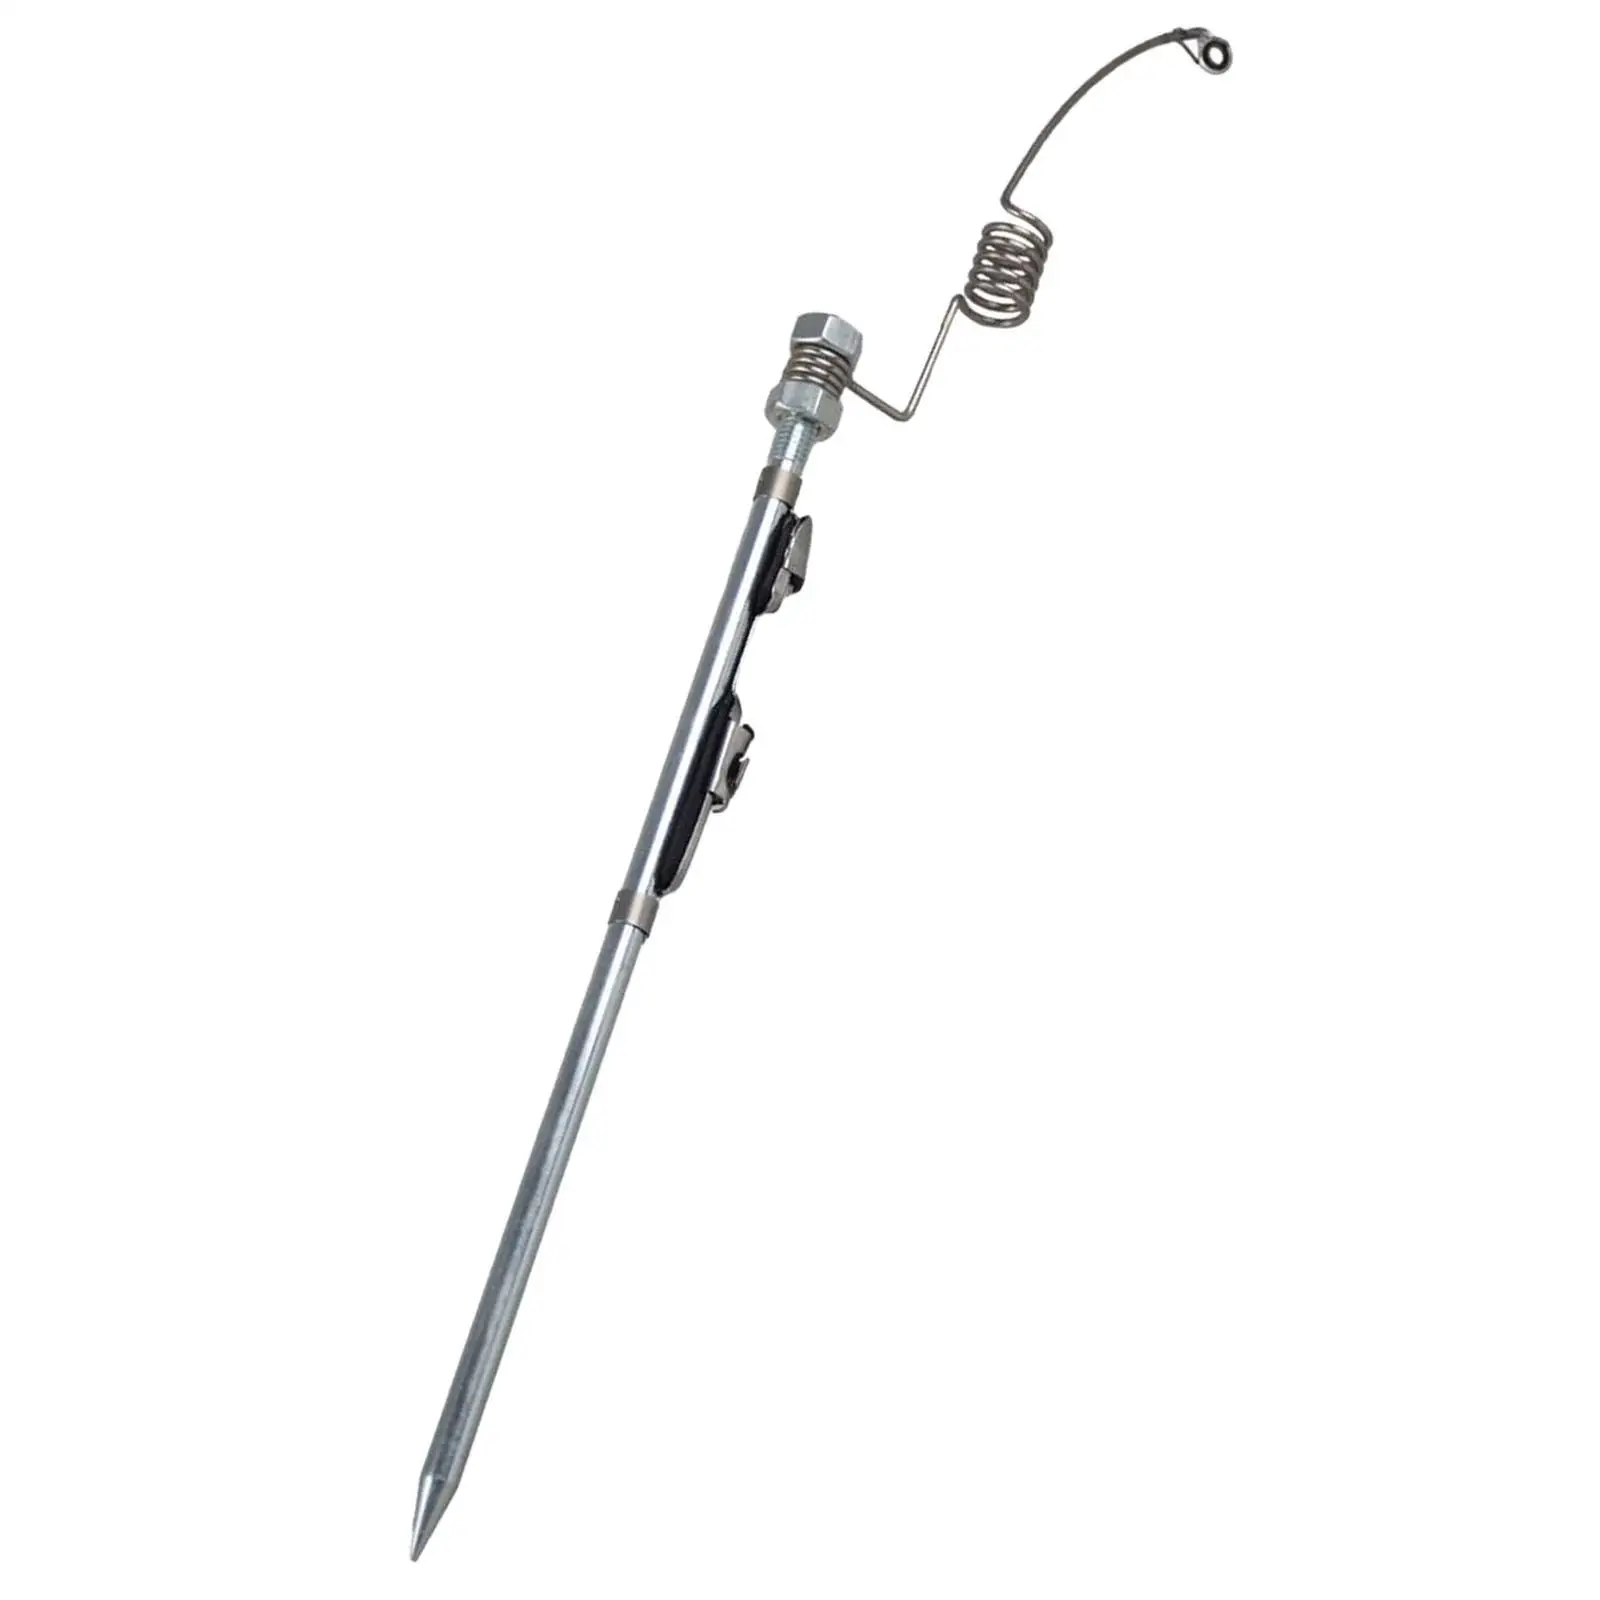 Ice Fishing Pole Portable Lightweight Fishing Accessory Travel Fishing Rod